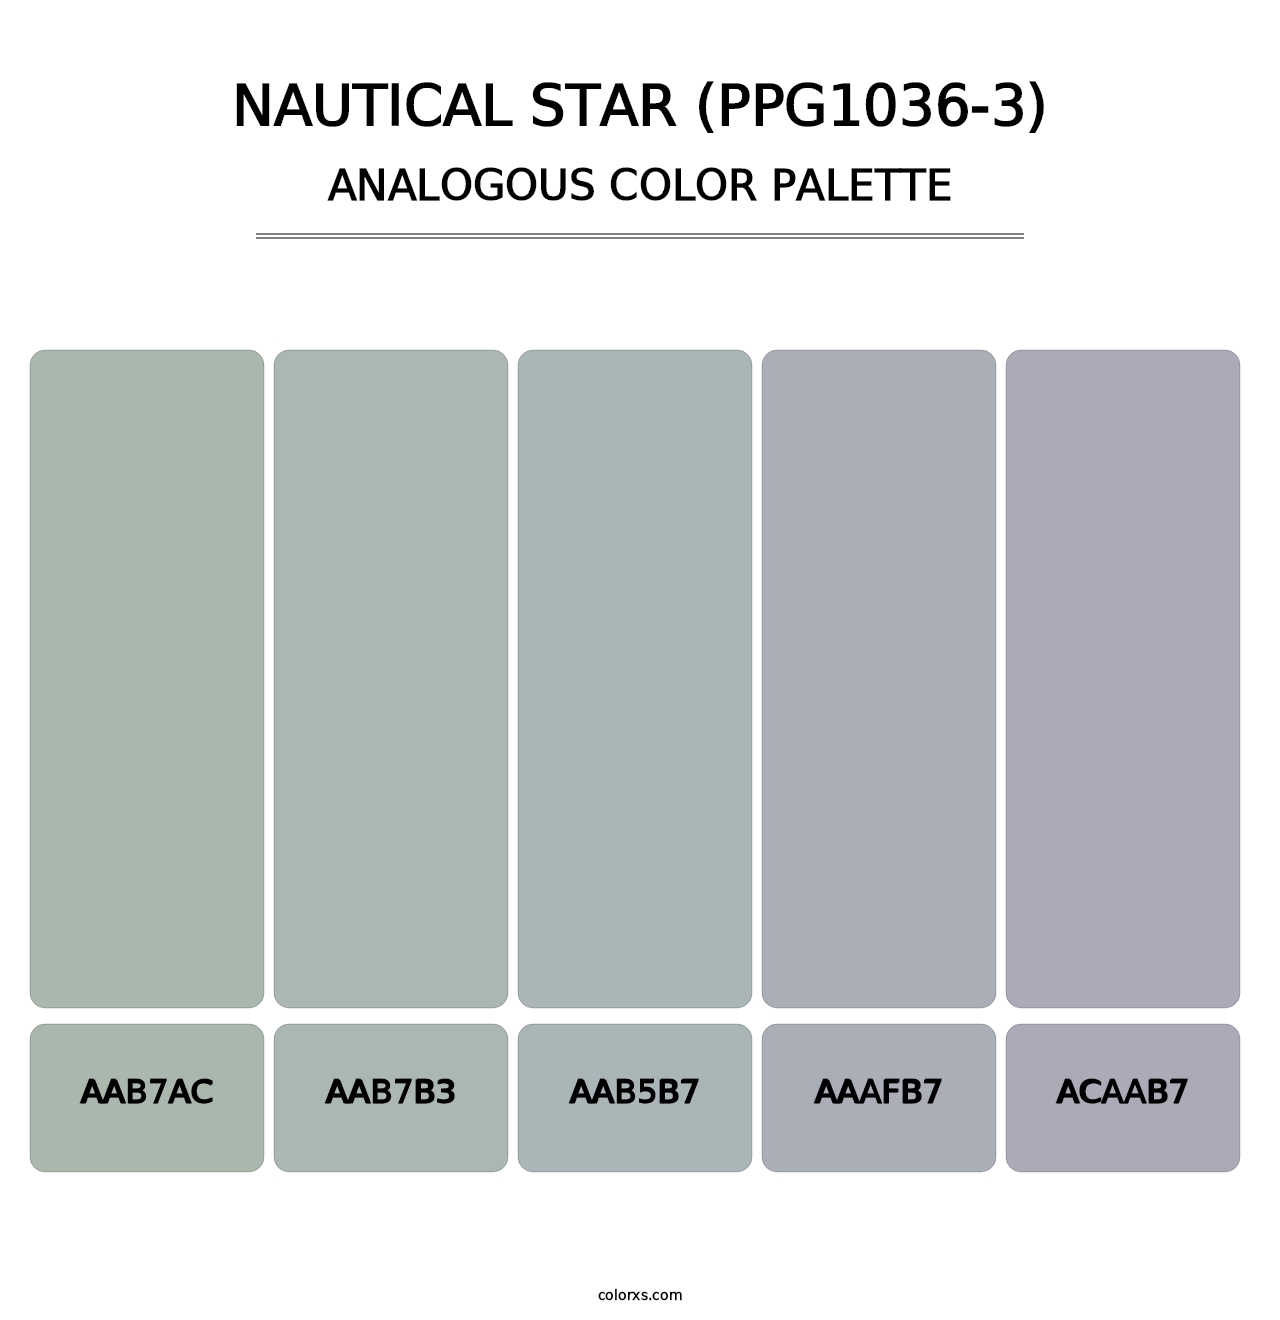 Nautical Star (PPG1036-3) - Analogous Color Palette